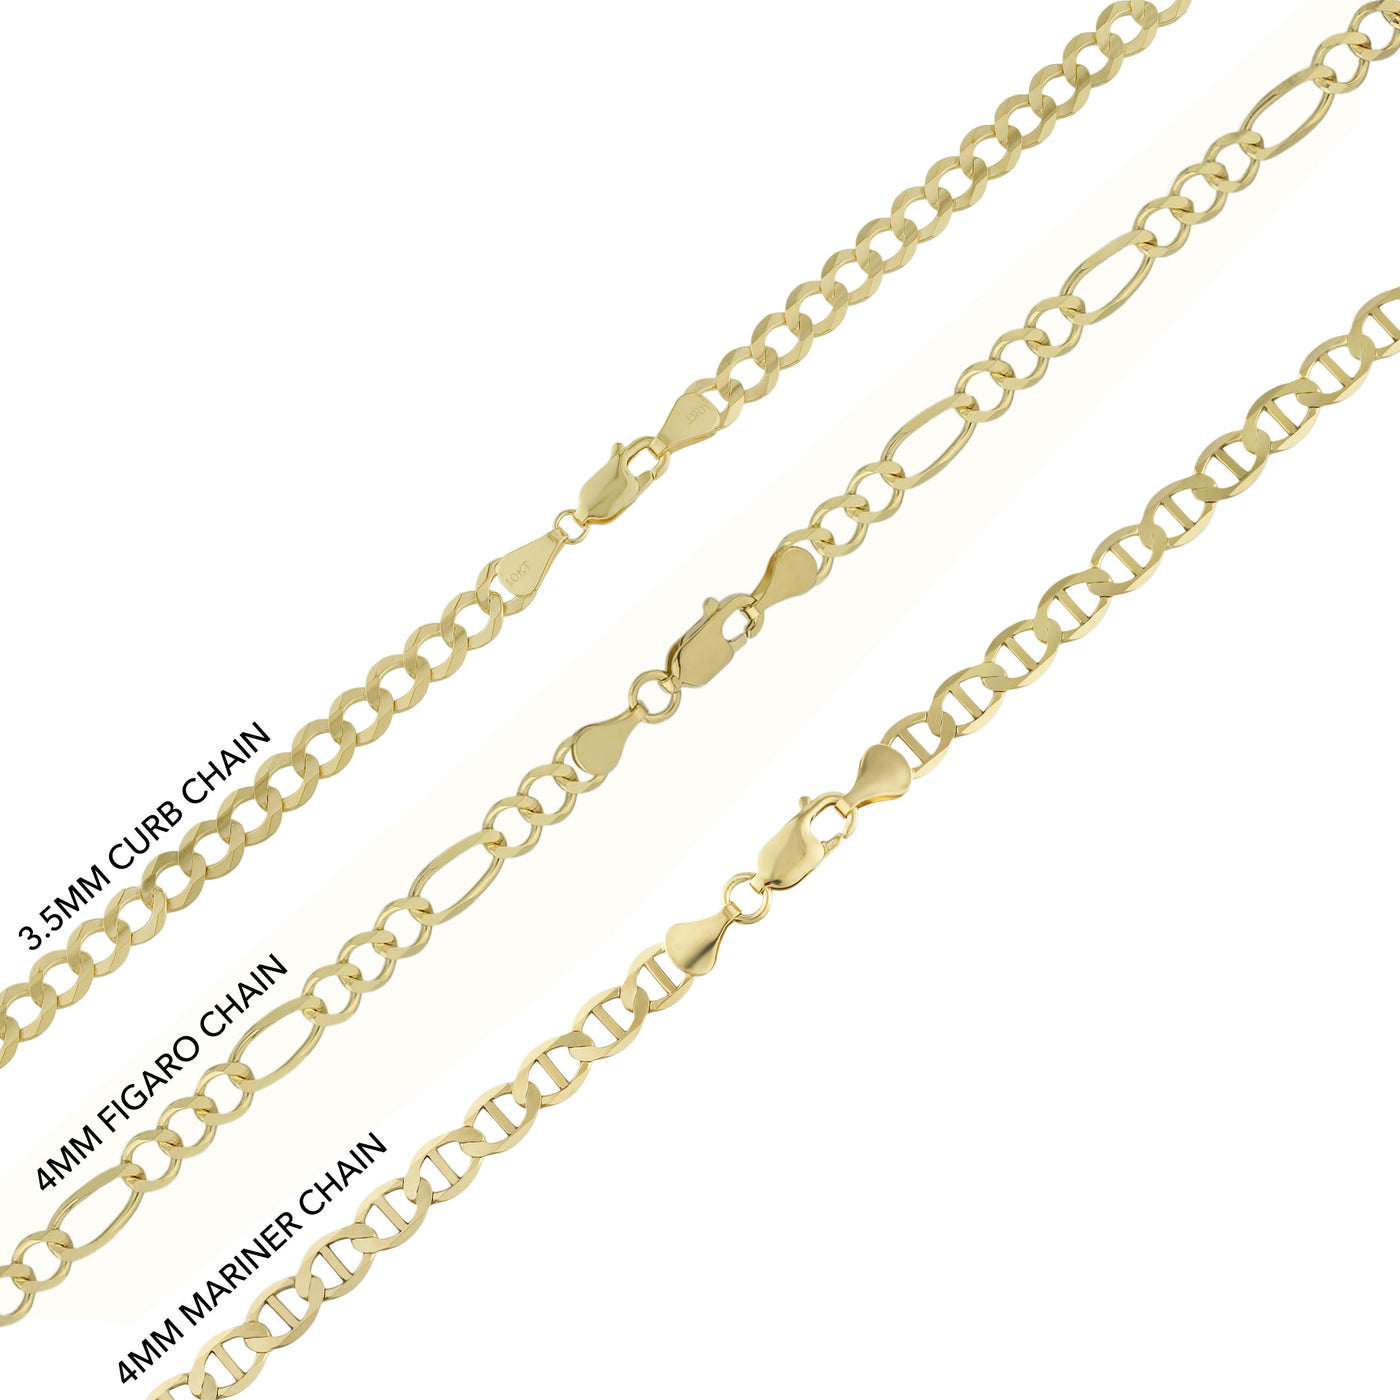 1 3/4" CZ Egyptian Queen Nefertiti Head Pendant & Chain Necklace Set 10K Yellow Gold